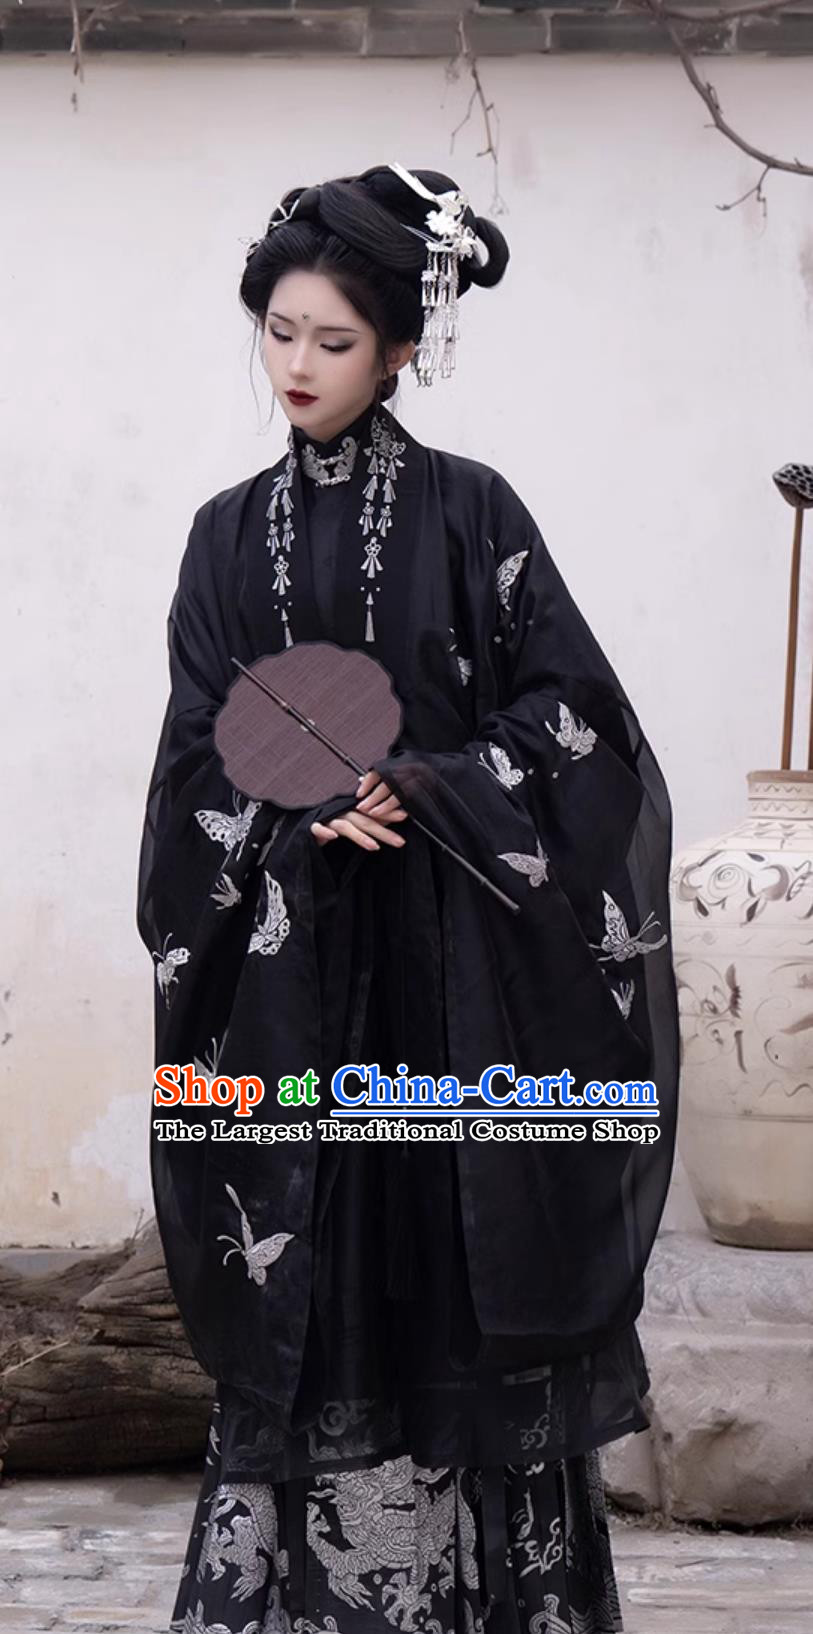 China Ancient Noble Woman Costumes Traditional Black Hanfu Dress Ming Dynasty Royal Mistress Clothing